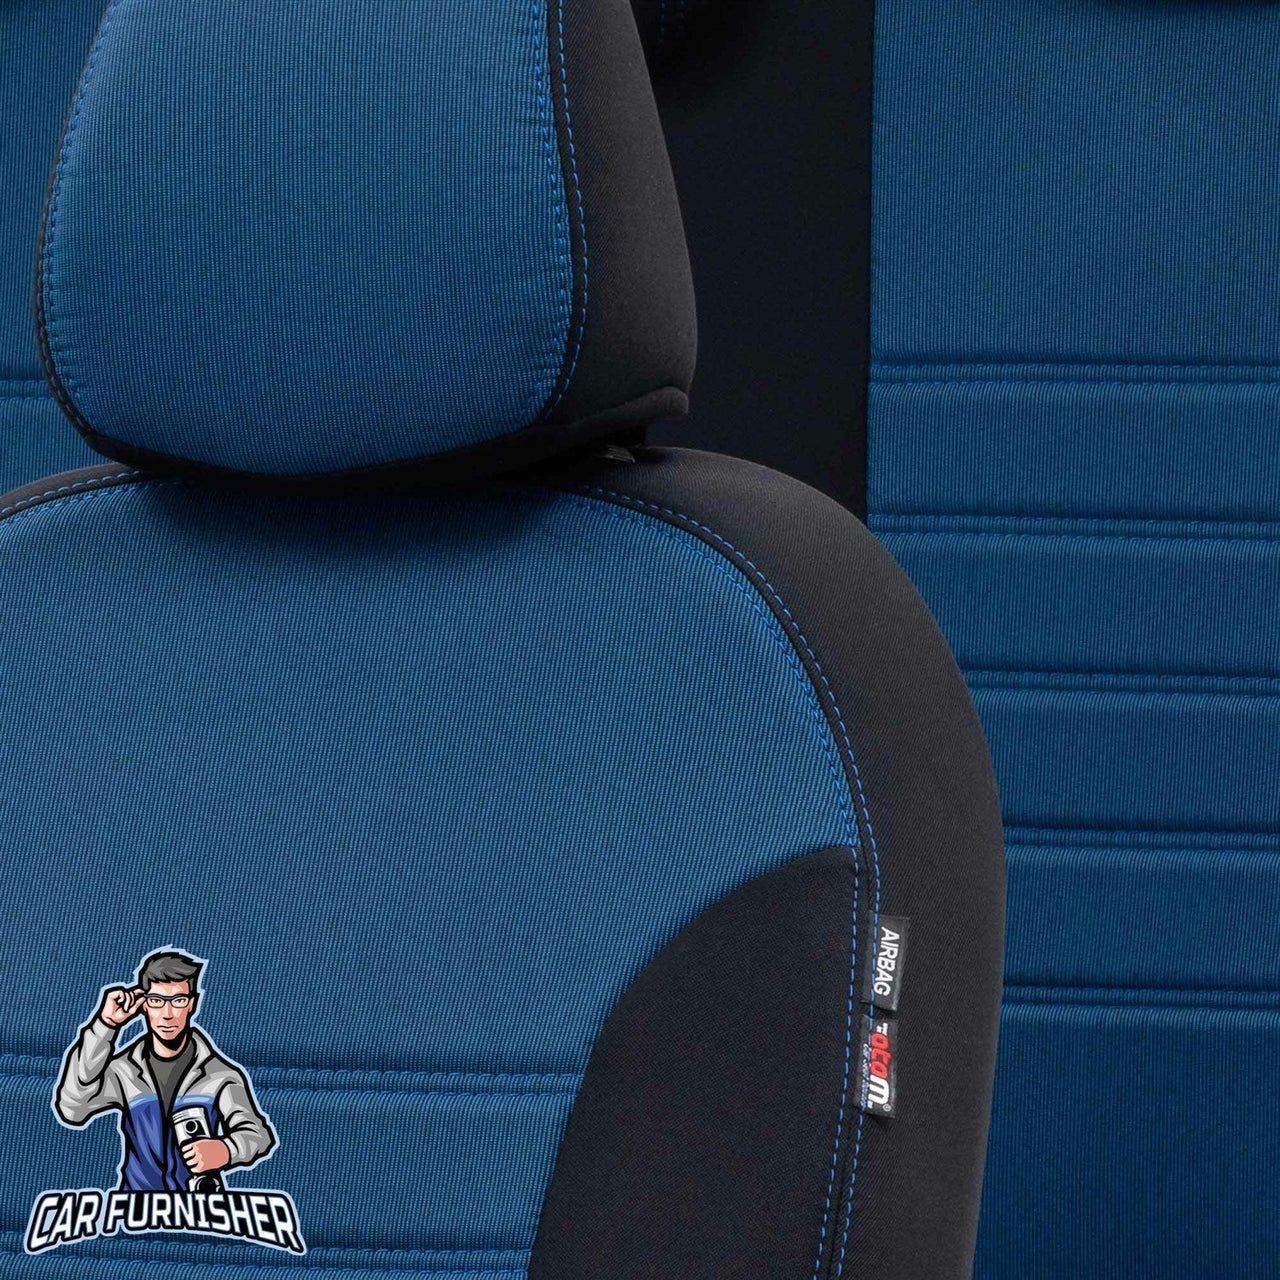 Volkswagen Touareg Seat Cover Original Jacquard Design Blue Jacquard Fabric